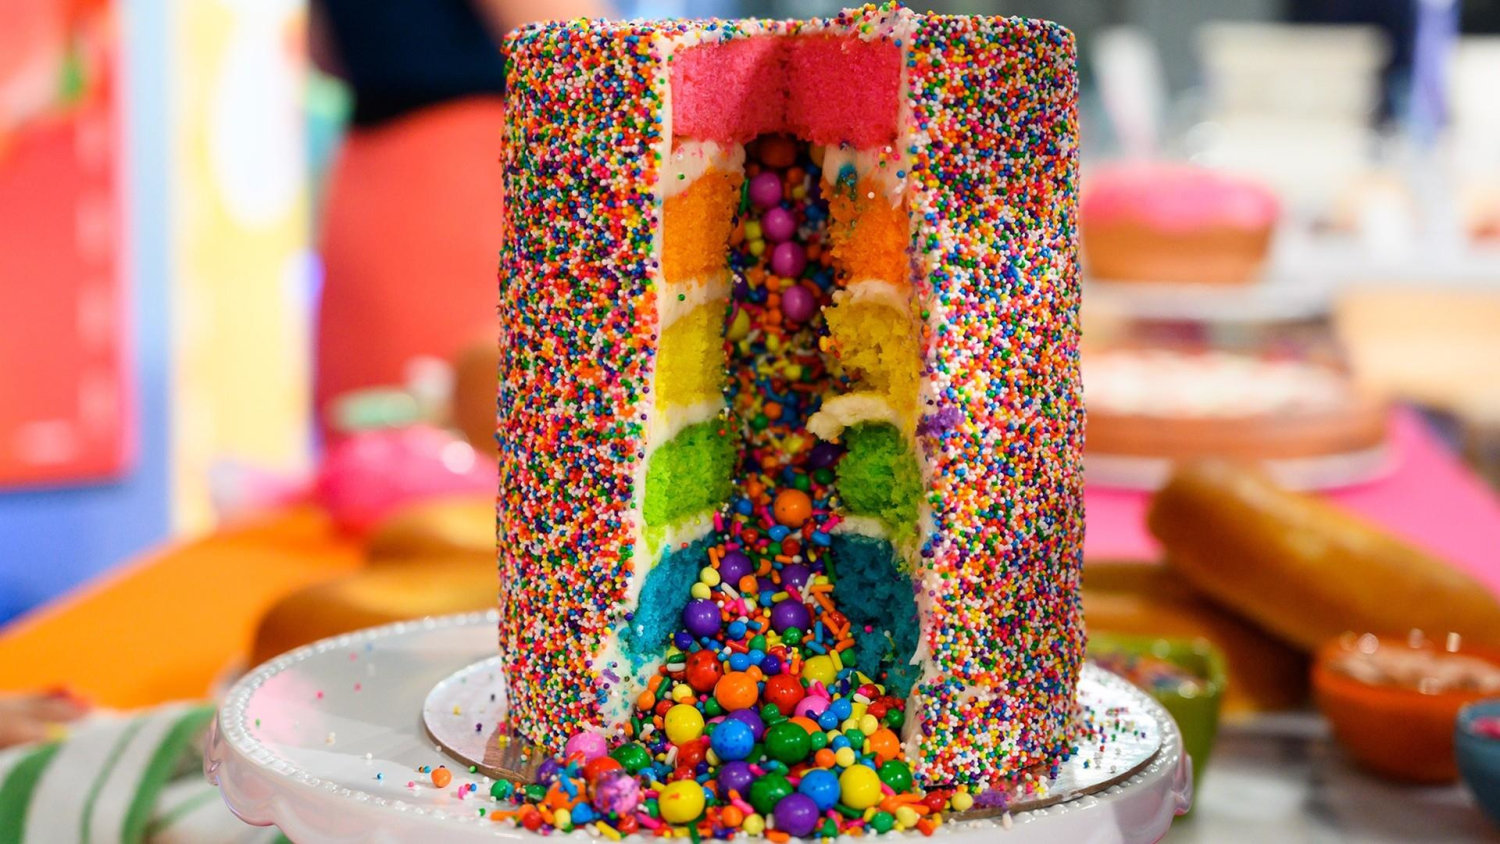 How to Make Flour Shop's Rainbow Explosion Cake | Williams Sonoma - YouTube